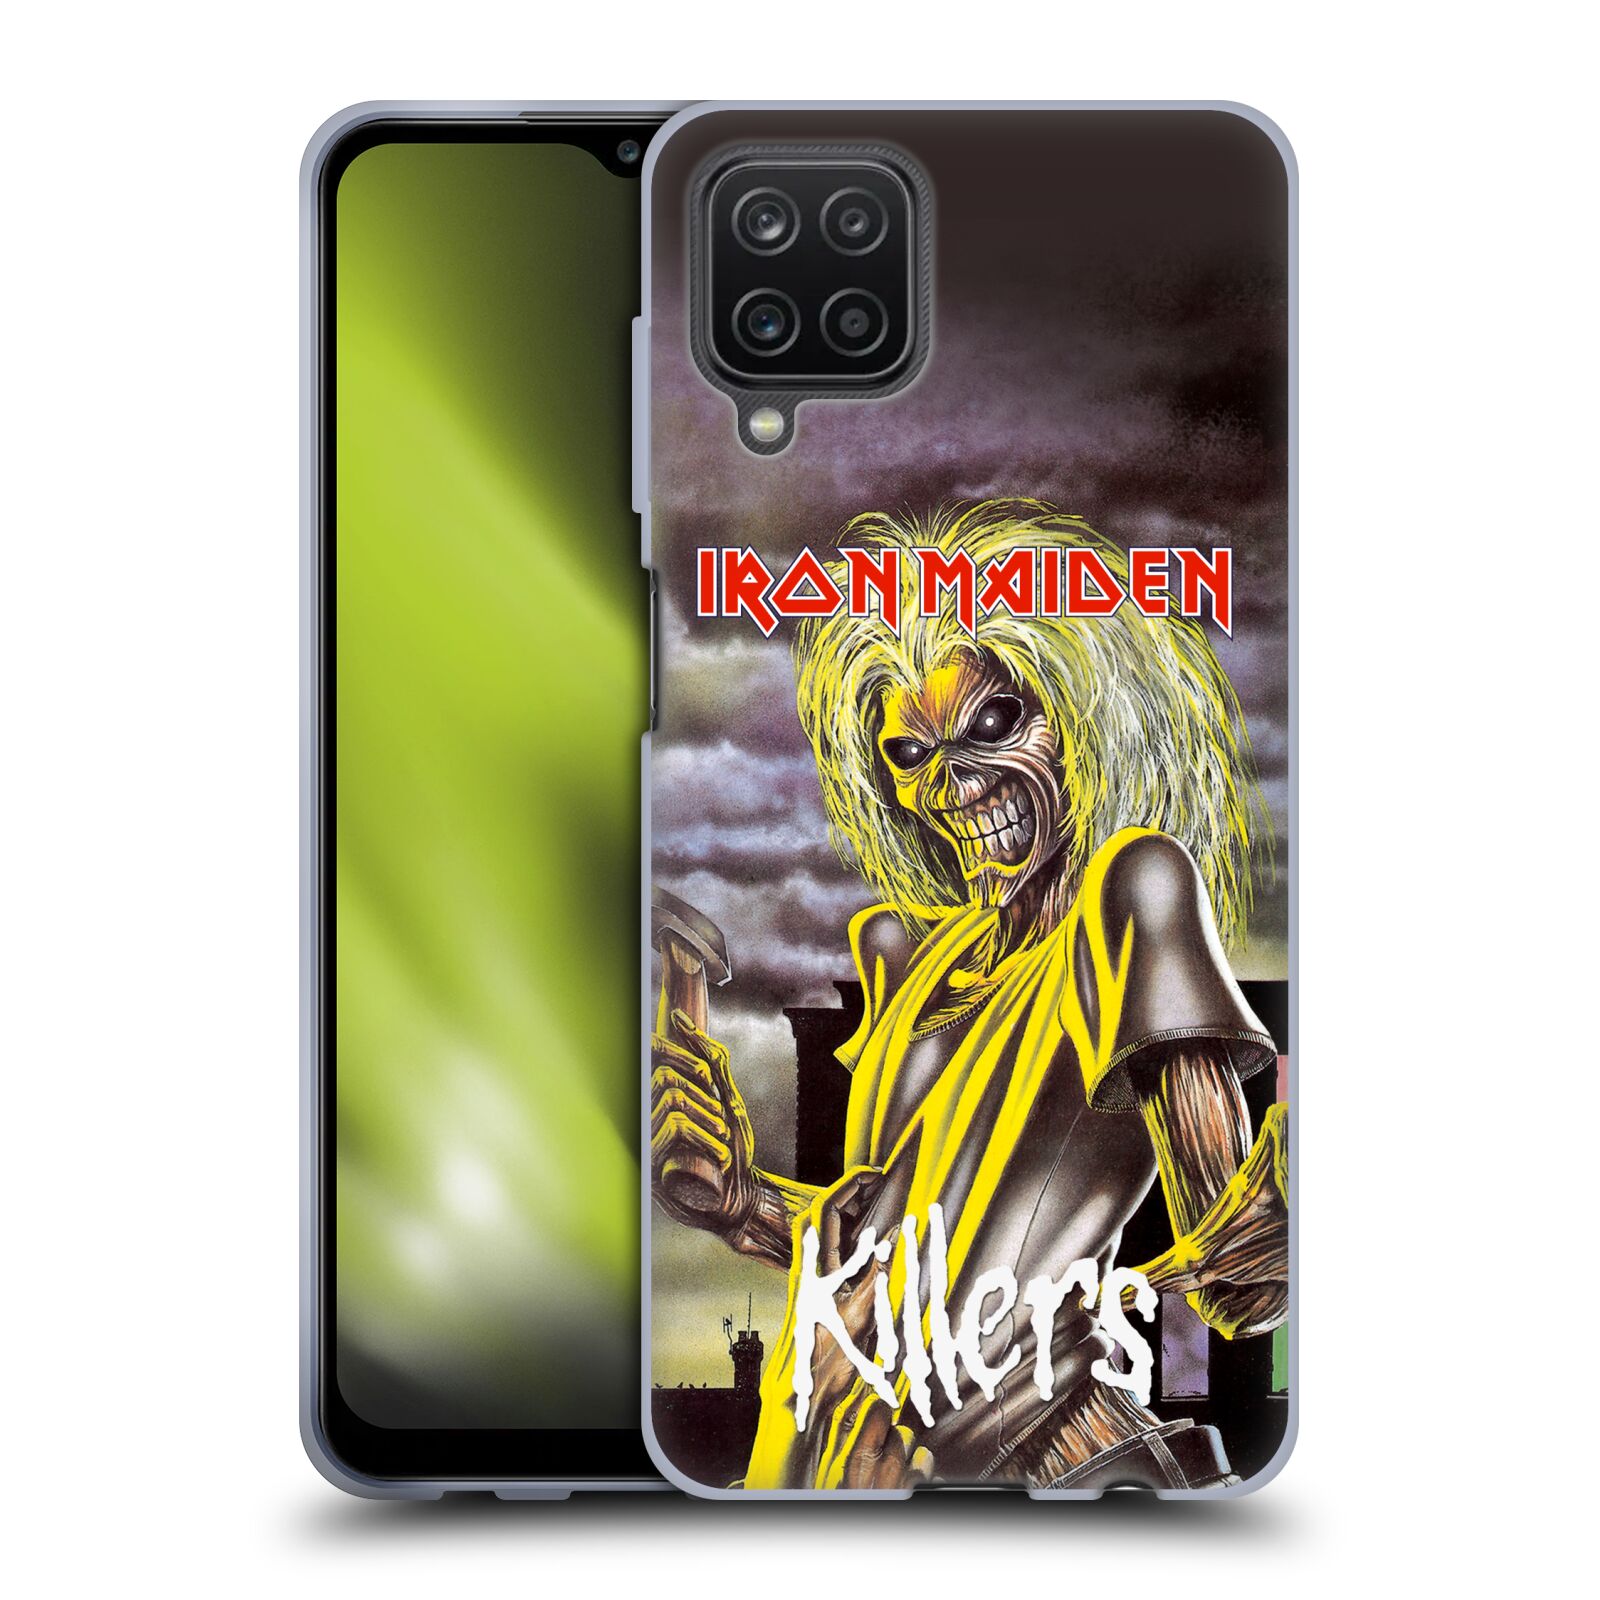 Silikonové pouzdro na mobil Samsung Galaxy A12 - Head Case - Iron Maiden - Killers (Silikonový kryt, obal, pouzdro na mobilní telefon Samsung Galaxy A12 s motivem Iron Maiden - Killers)